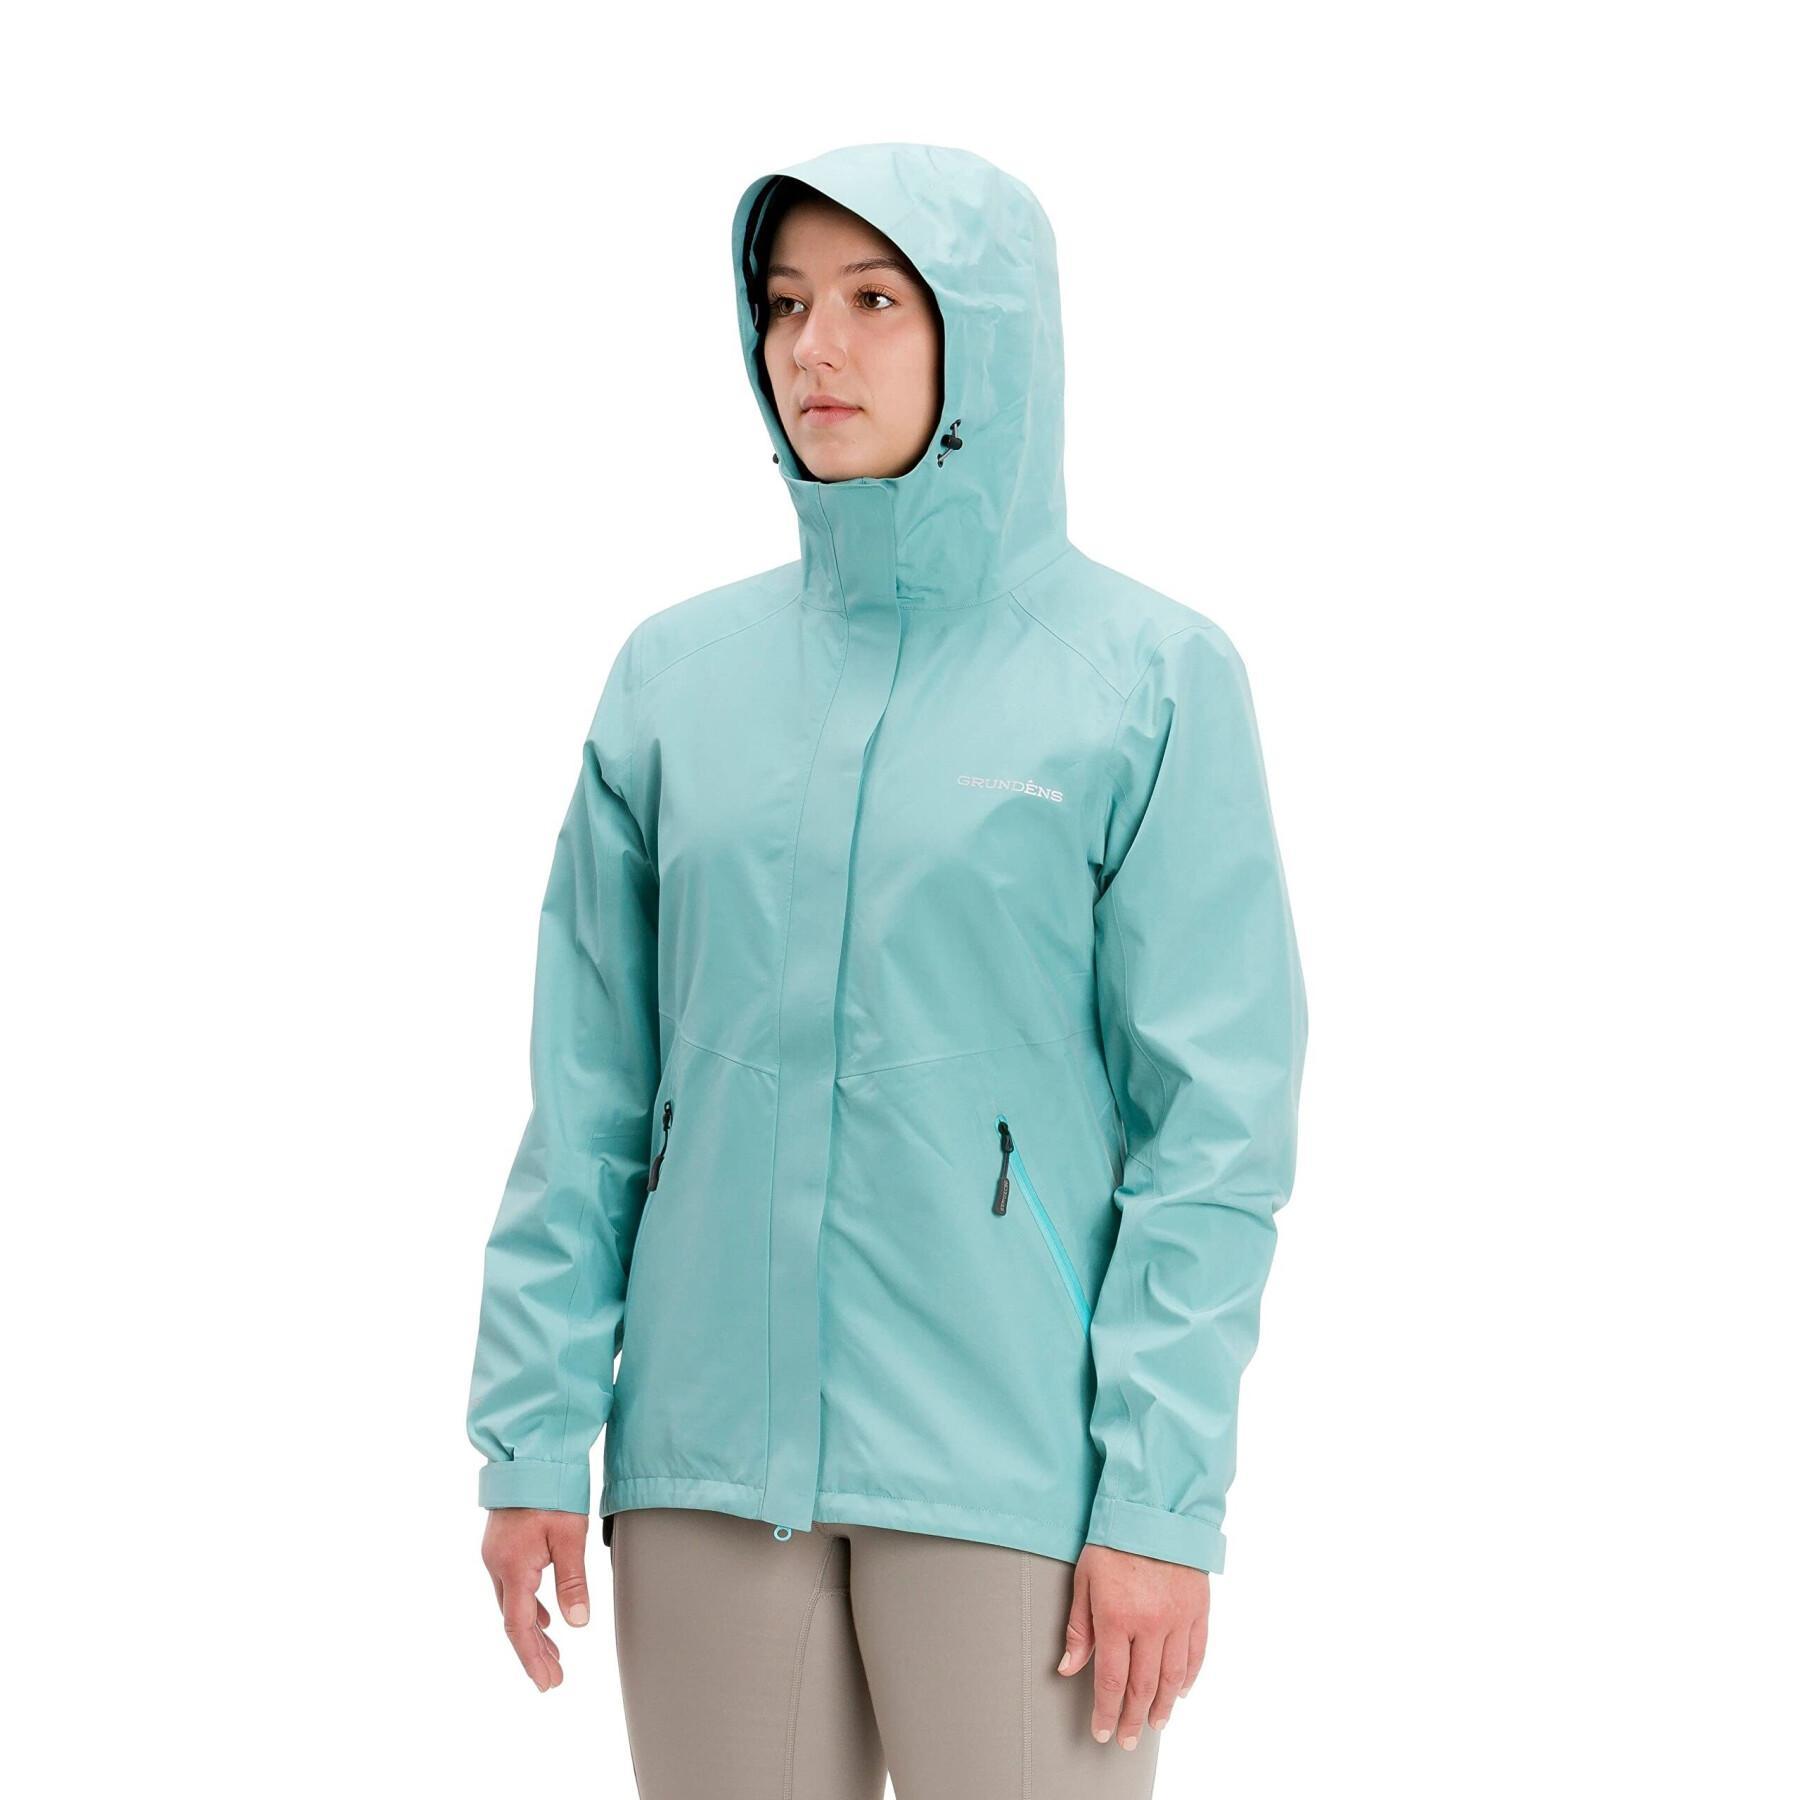 Waterproof jacket woman grundens charter gore tex aqua sea